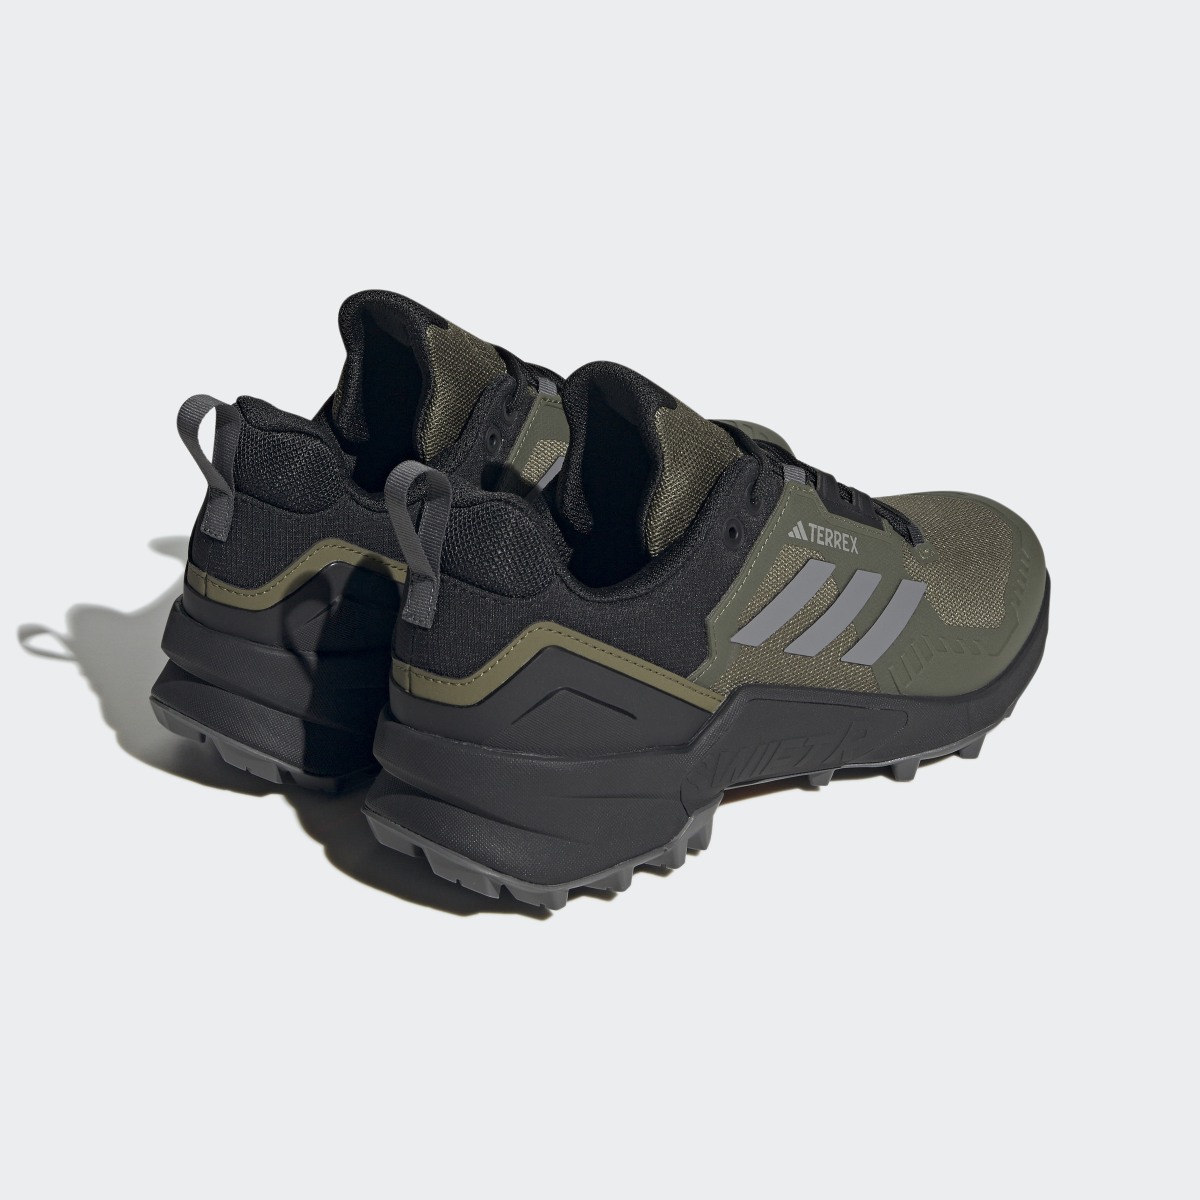 Adidas Terrex Swift R3 Hiking Shoes. 6